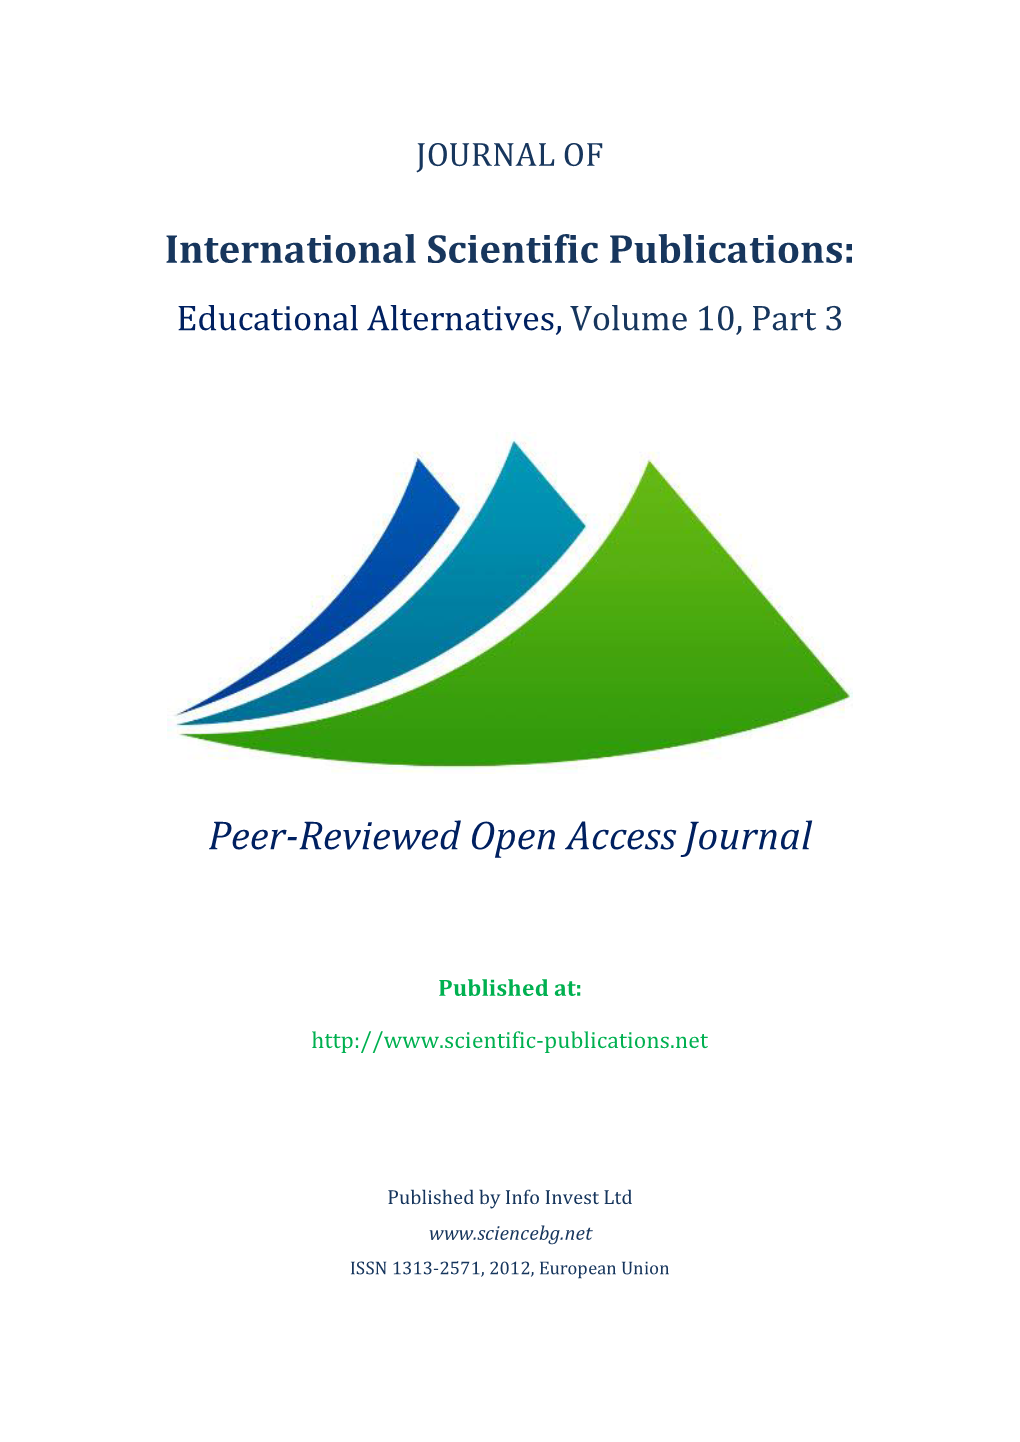 Journal of International Scientific: Educational Alternatives, Volume 10